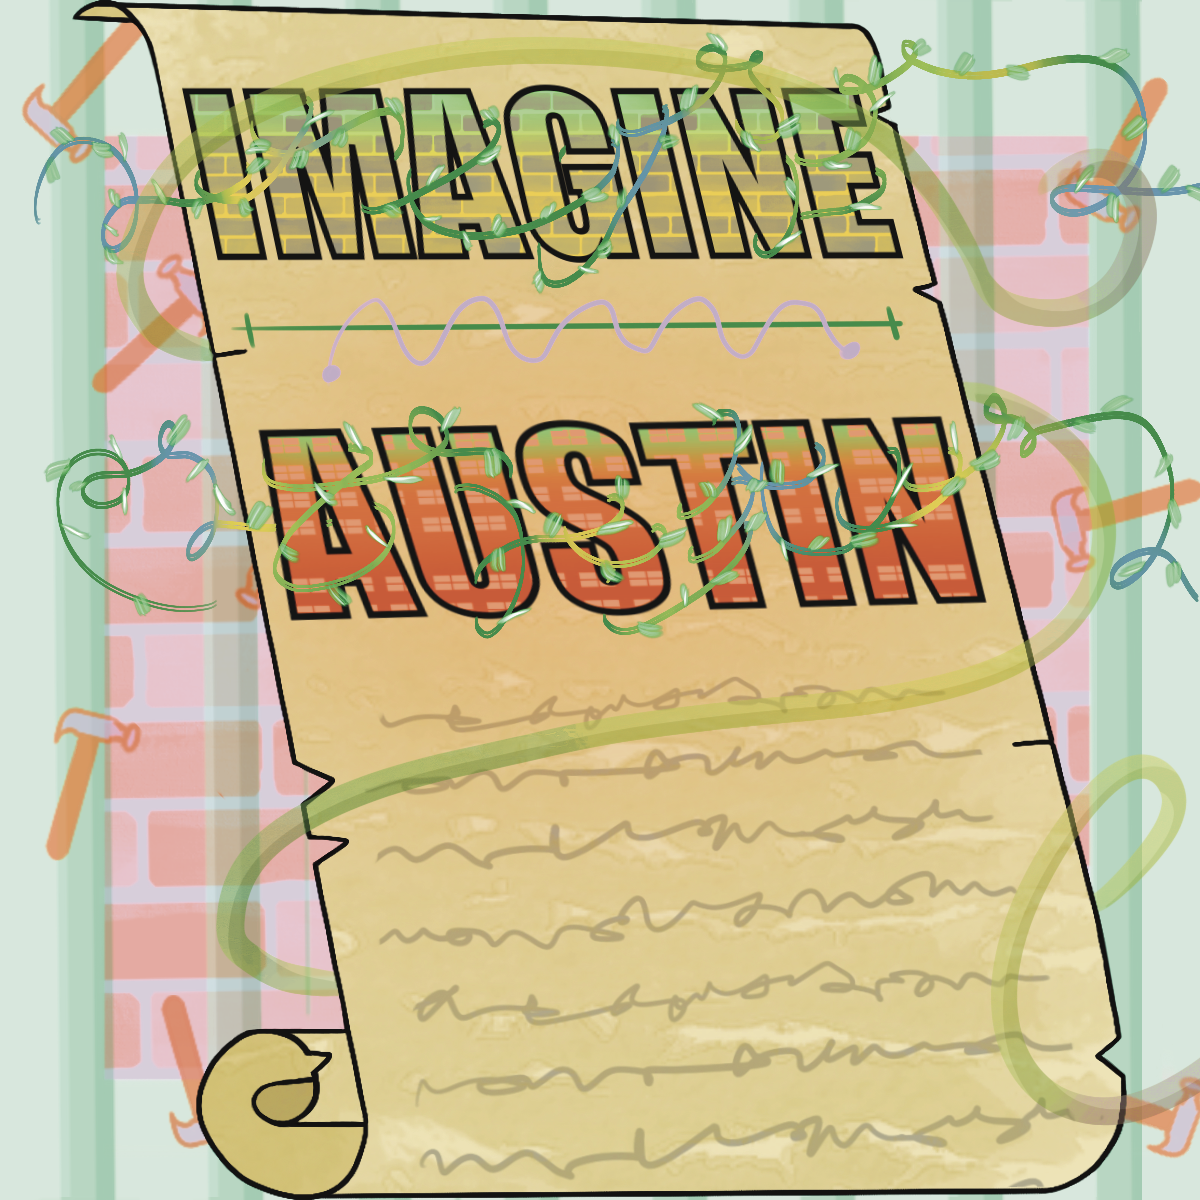 City+of+Austin+set+to+update+Imagine+Austin+plan